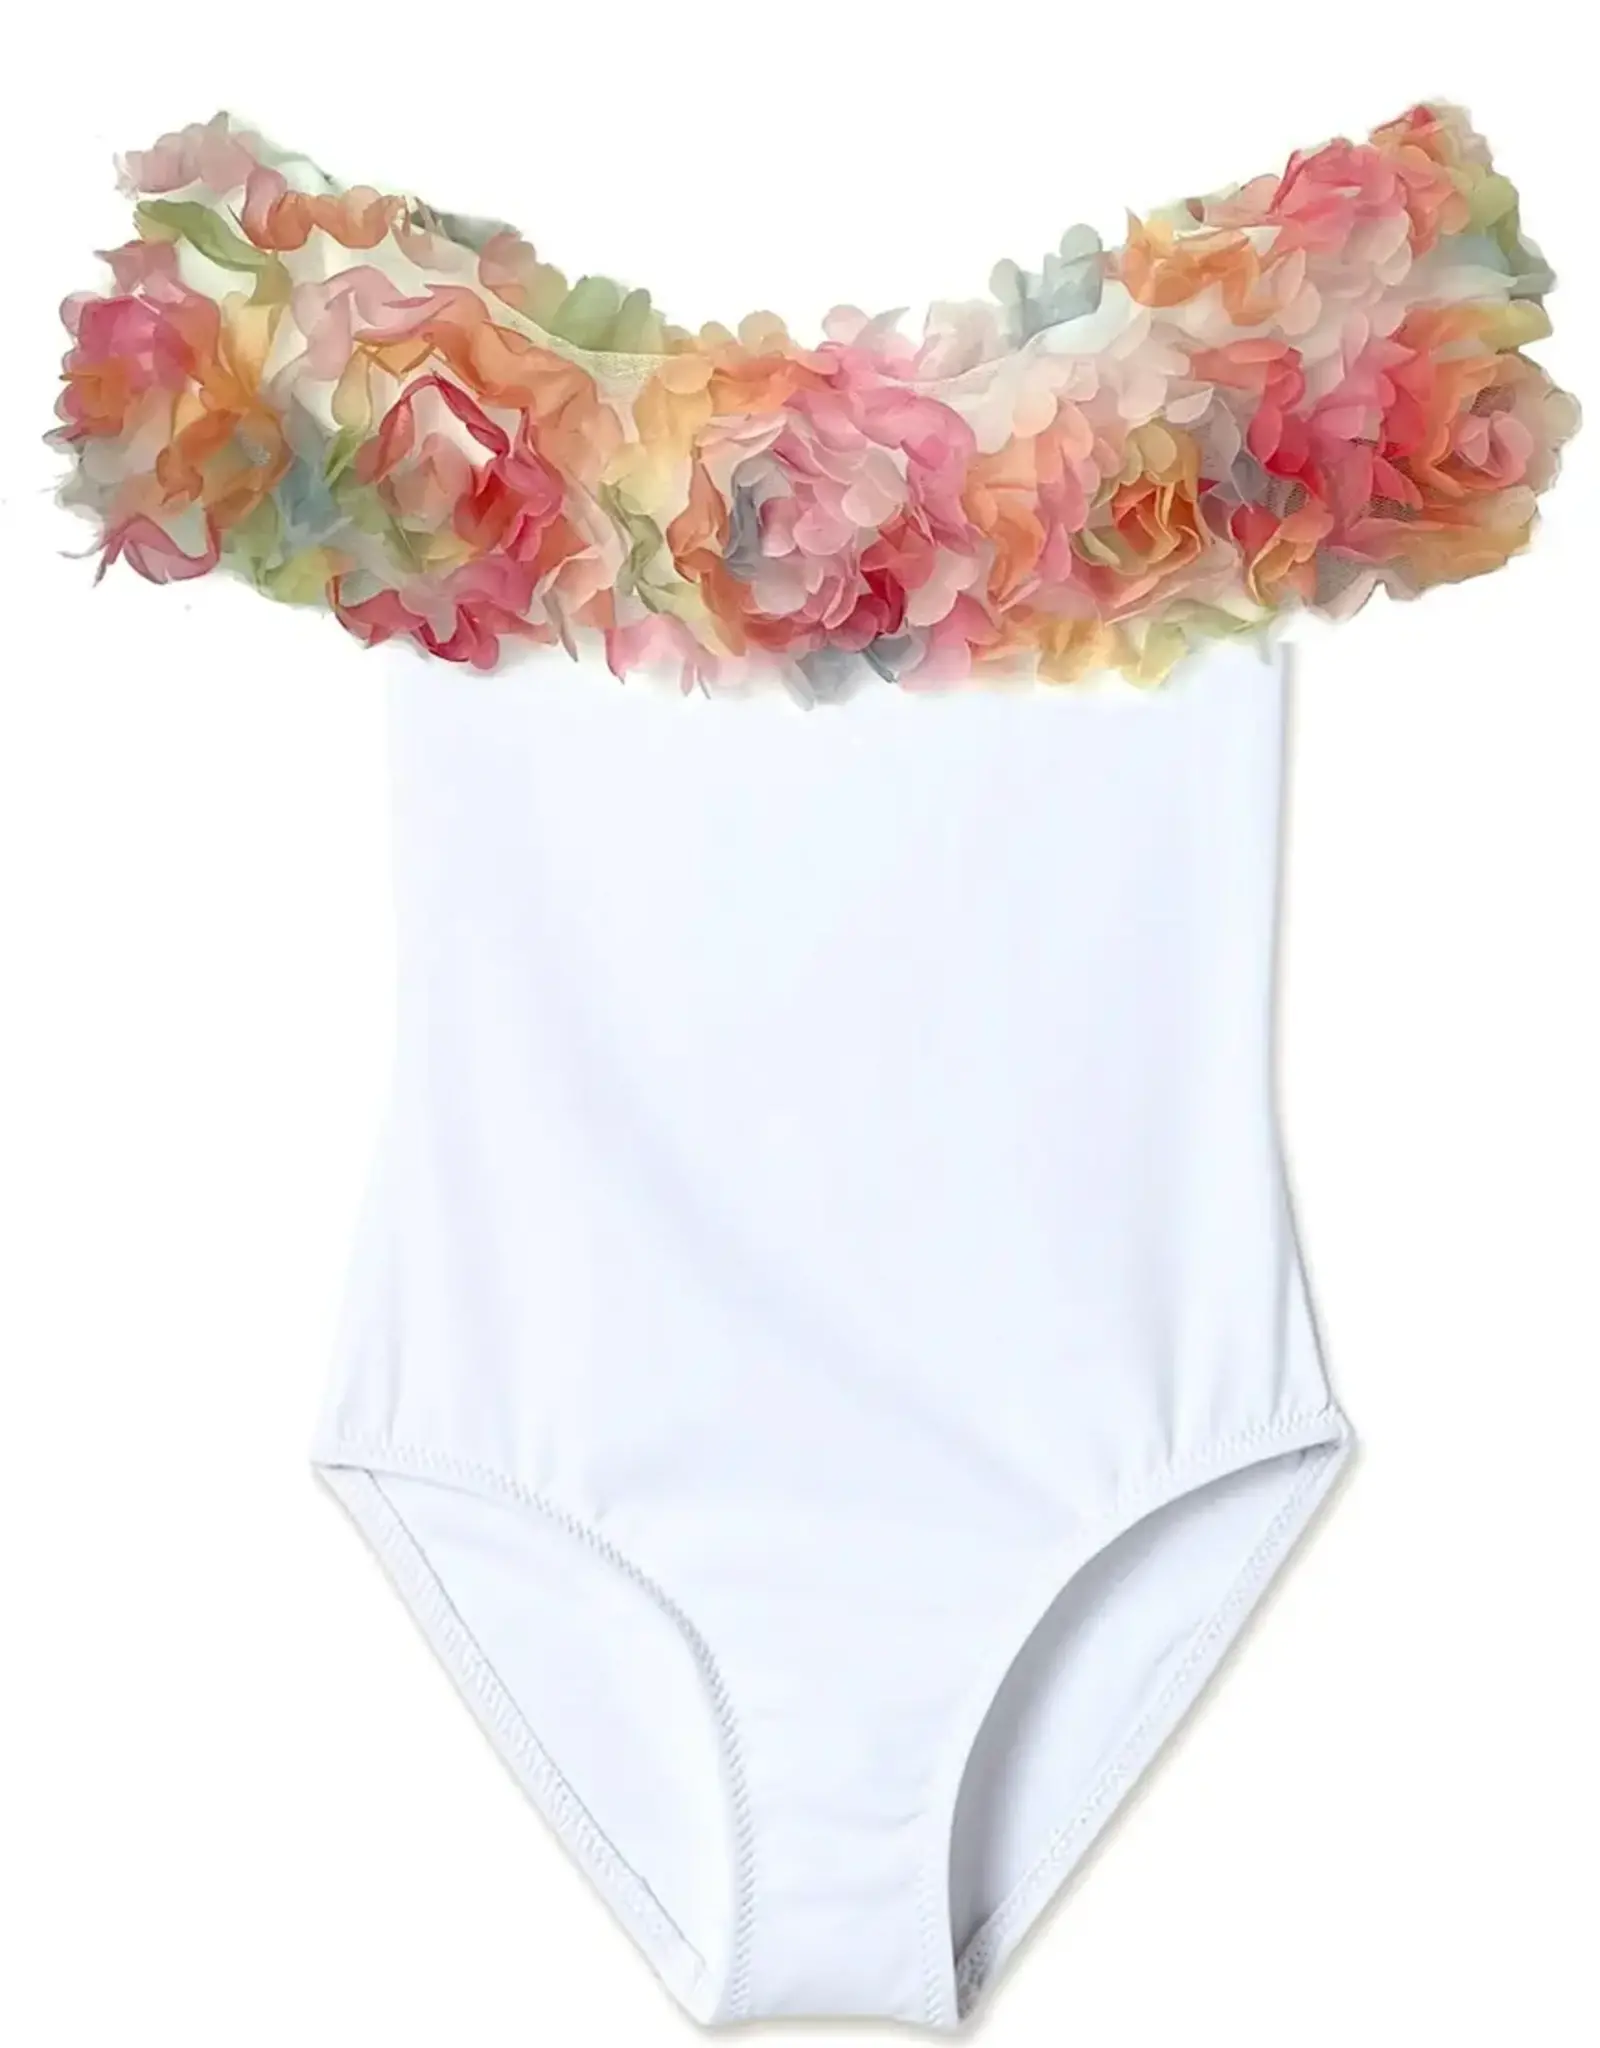 Bloom Swimsuit